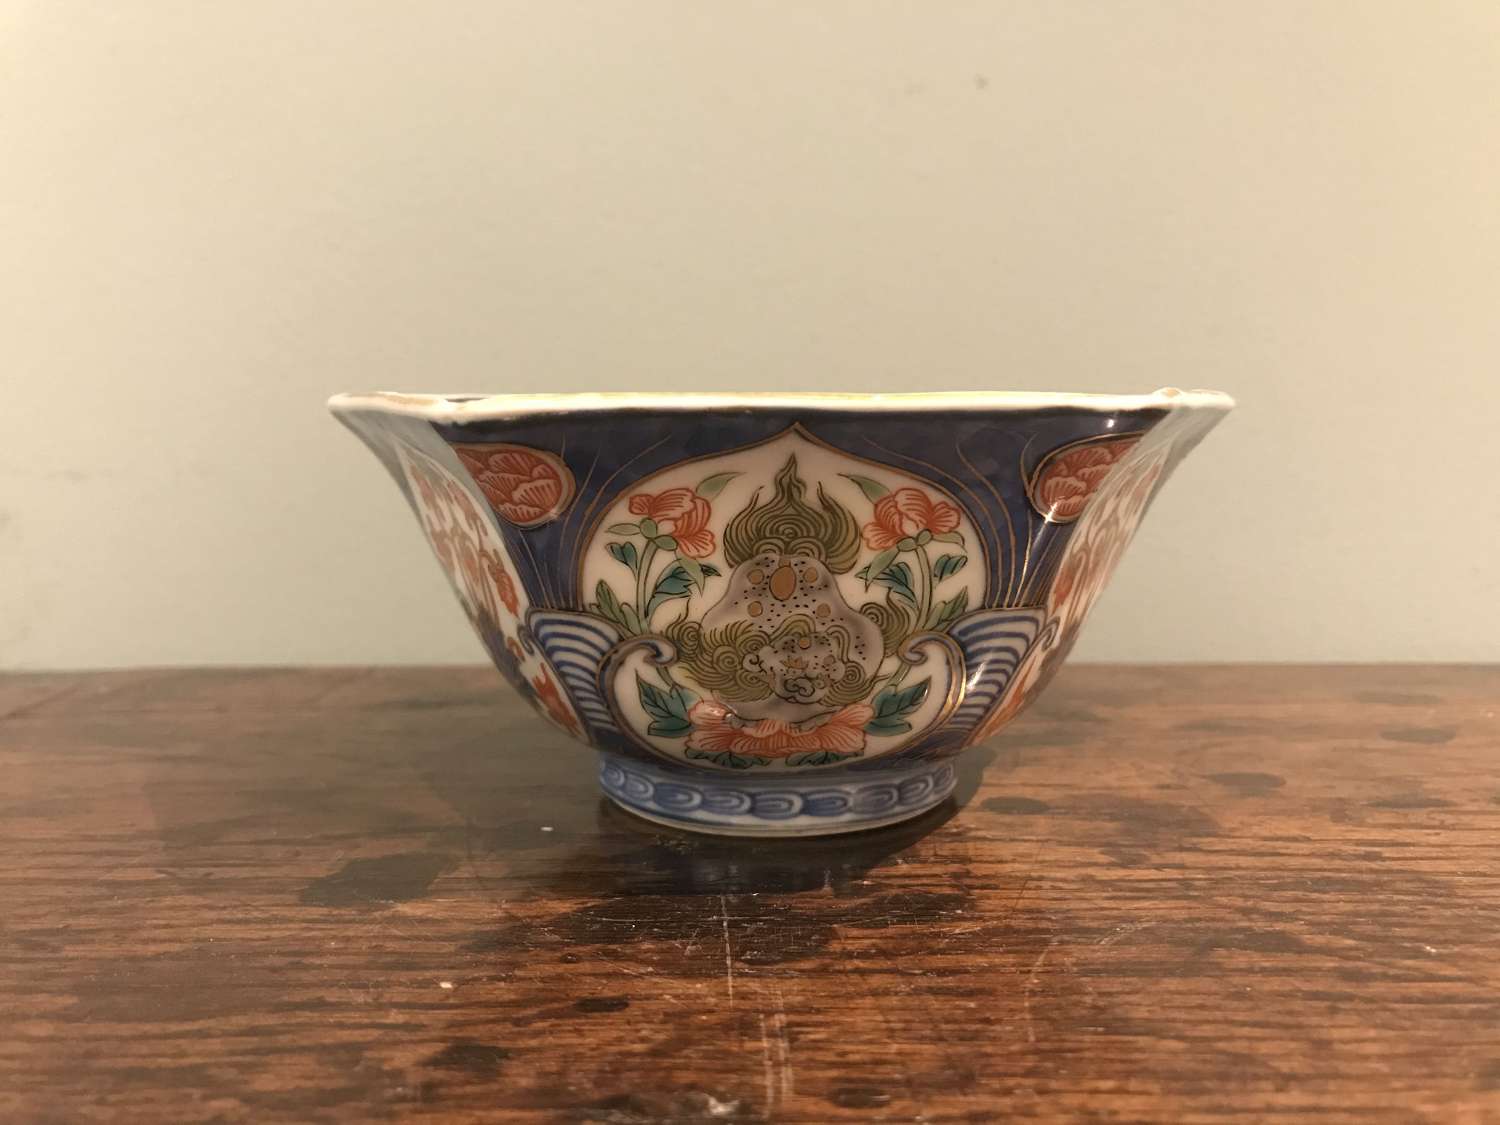 18th c. Japanese hexagonal bowl